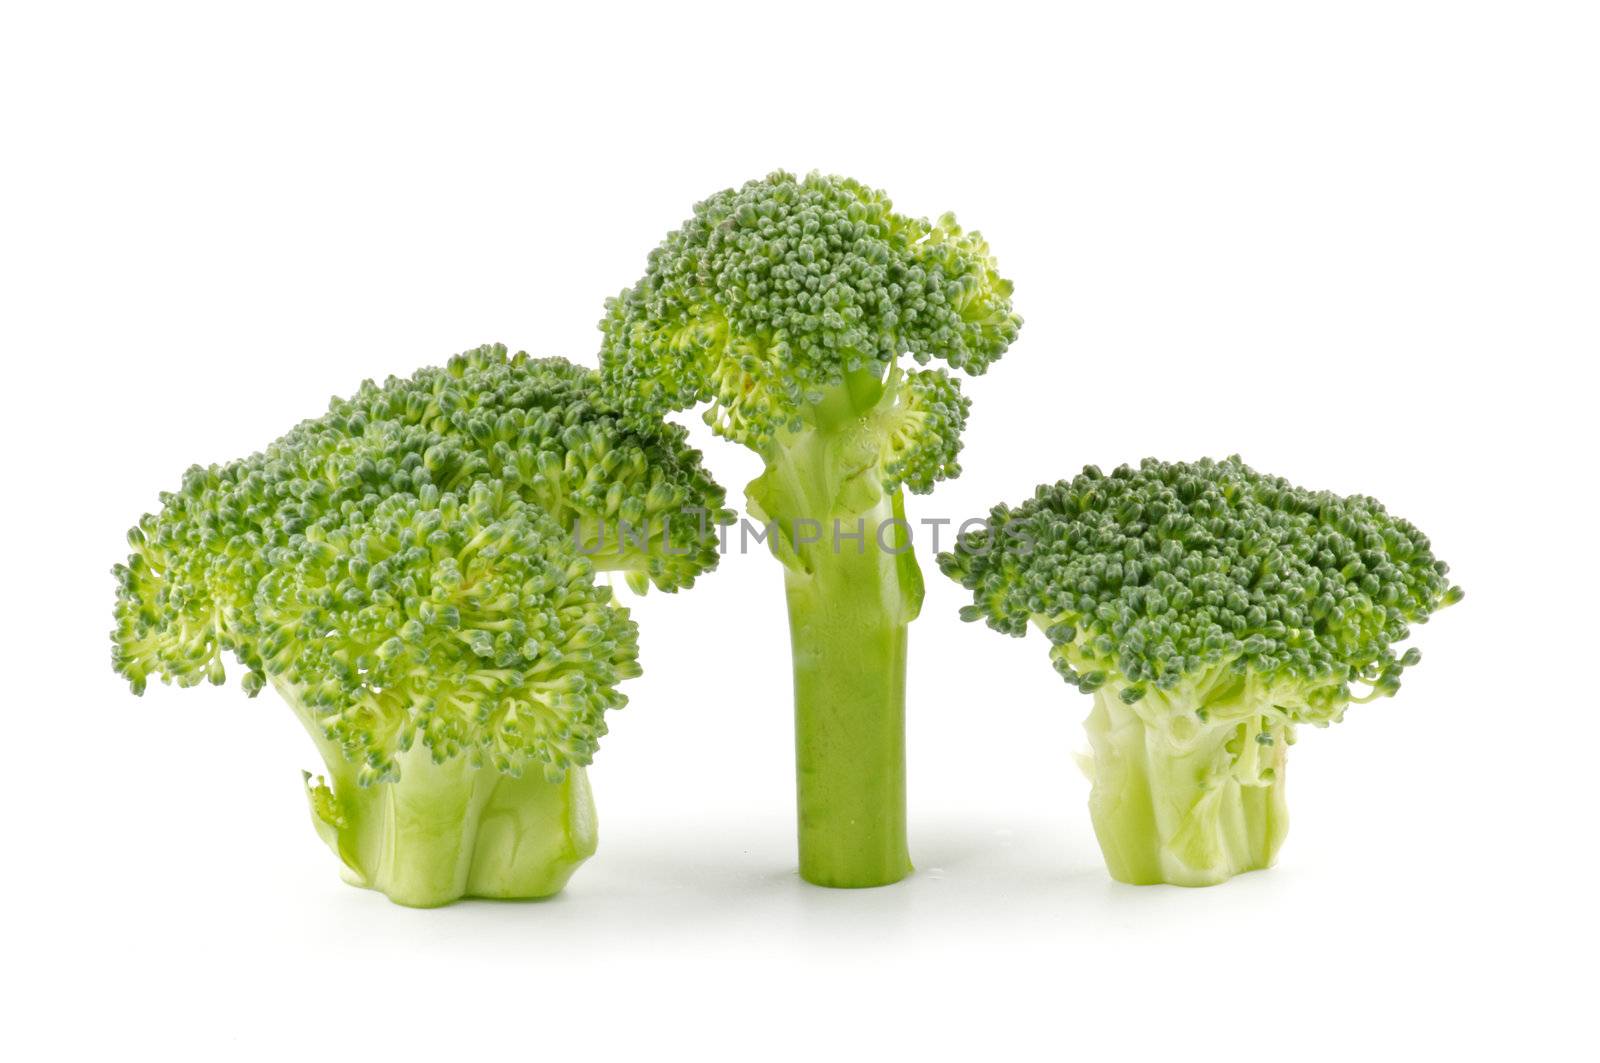 Three broccoli florets  by zhekos